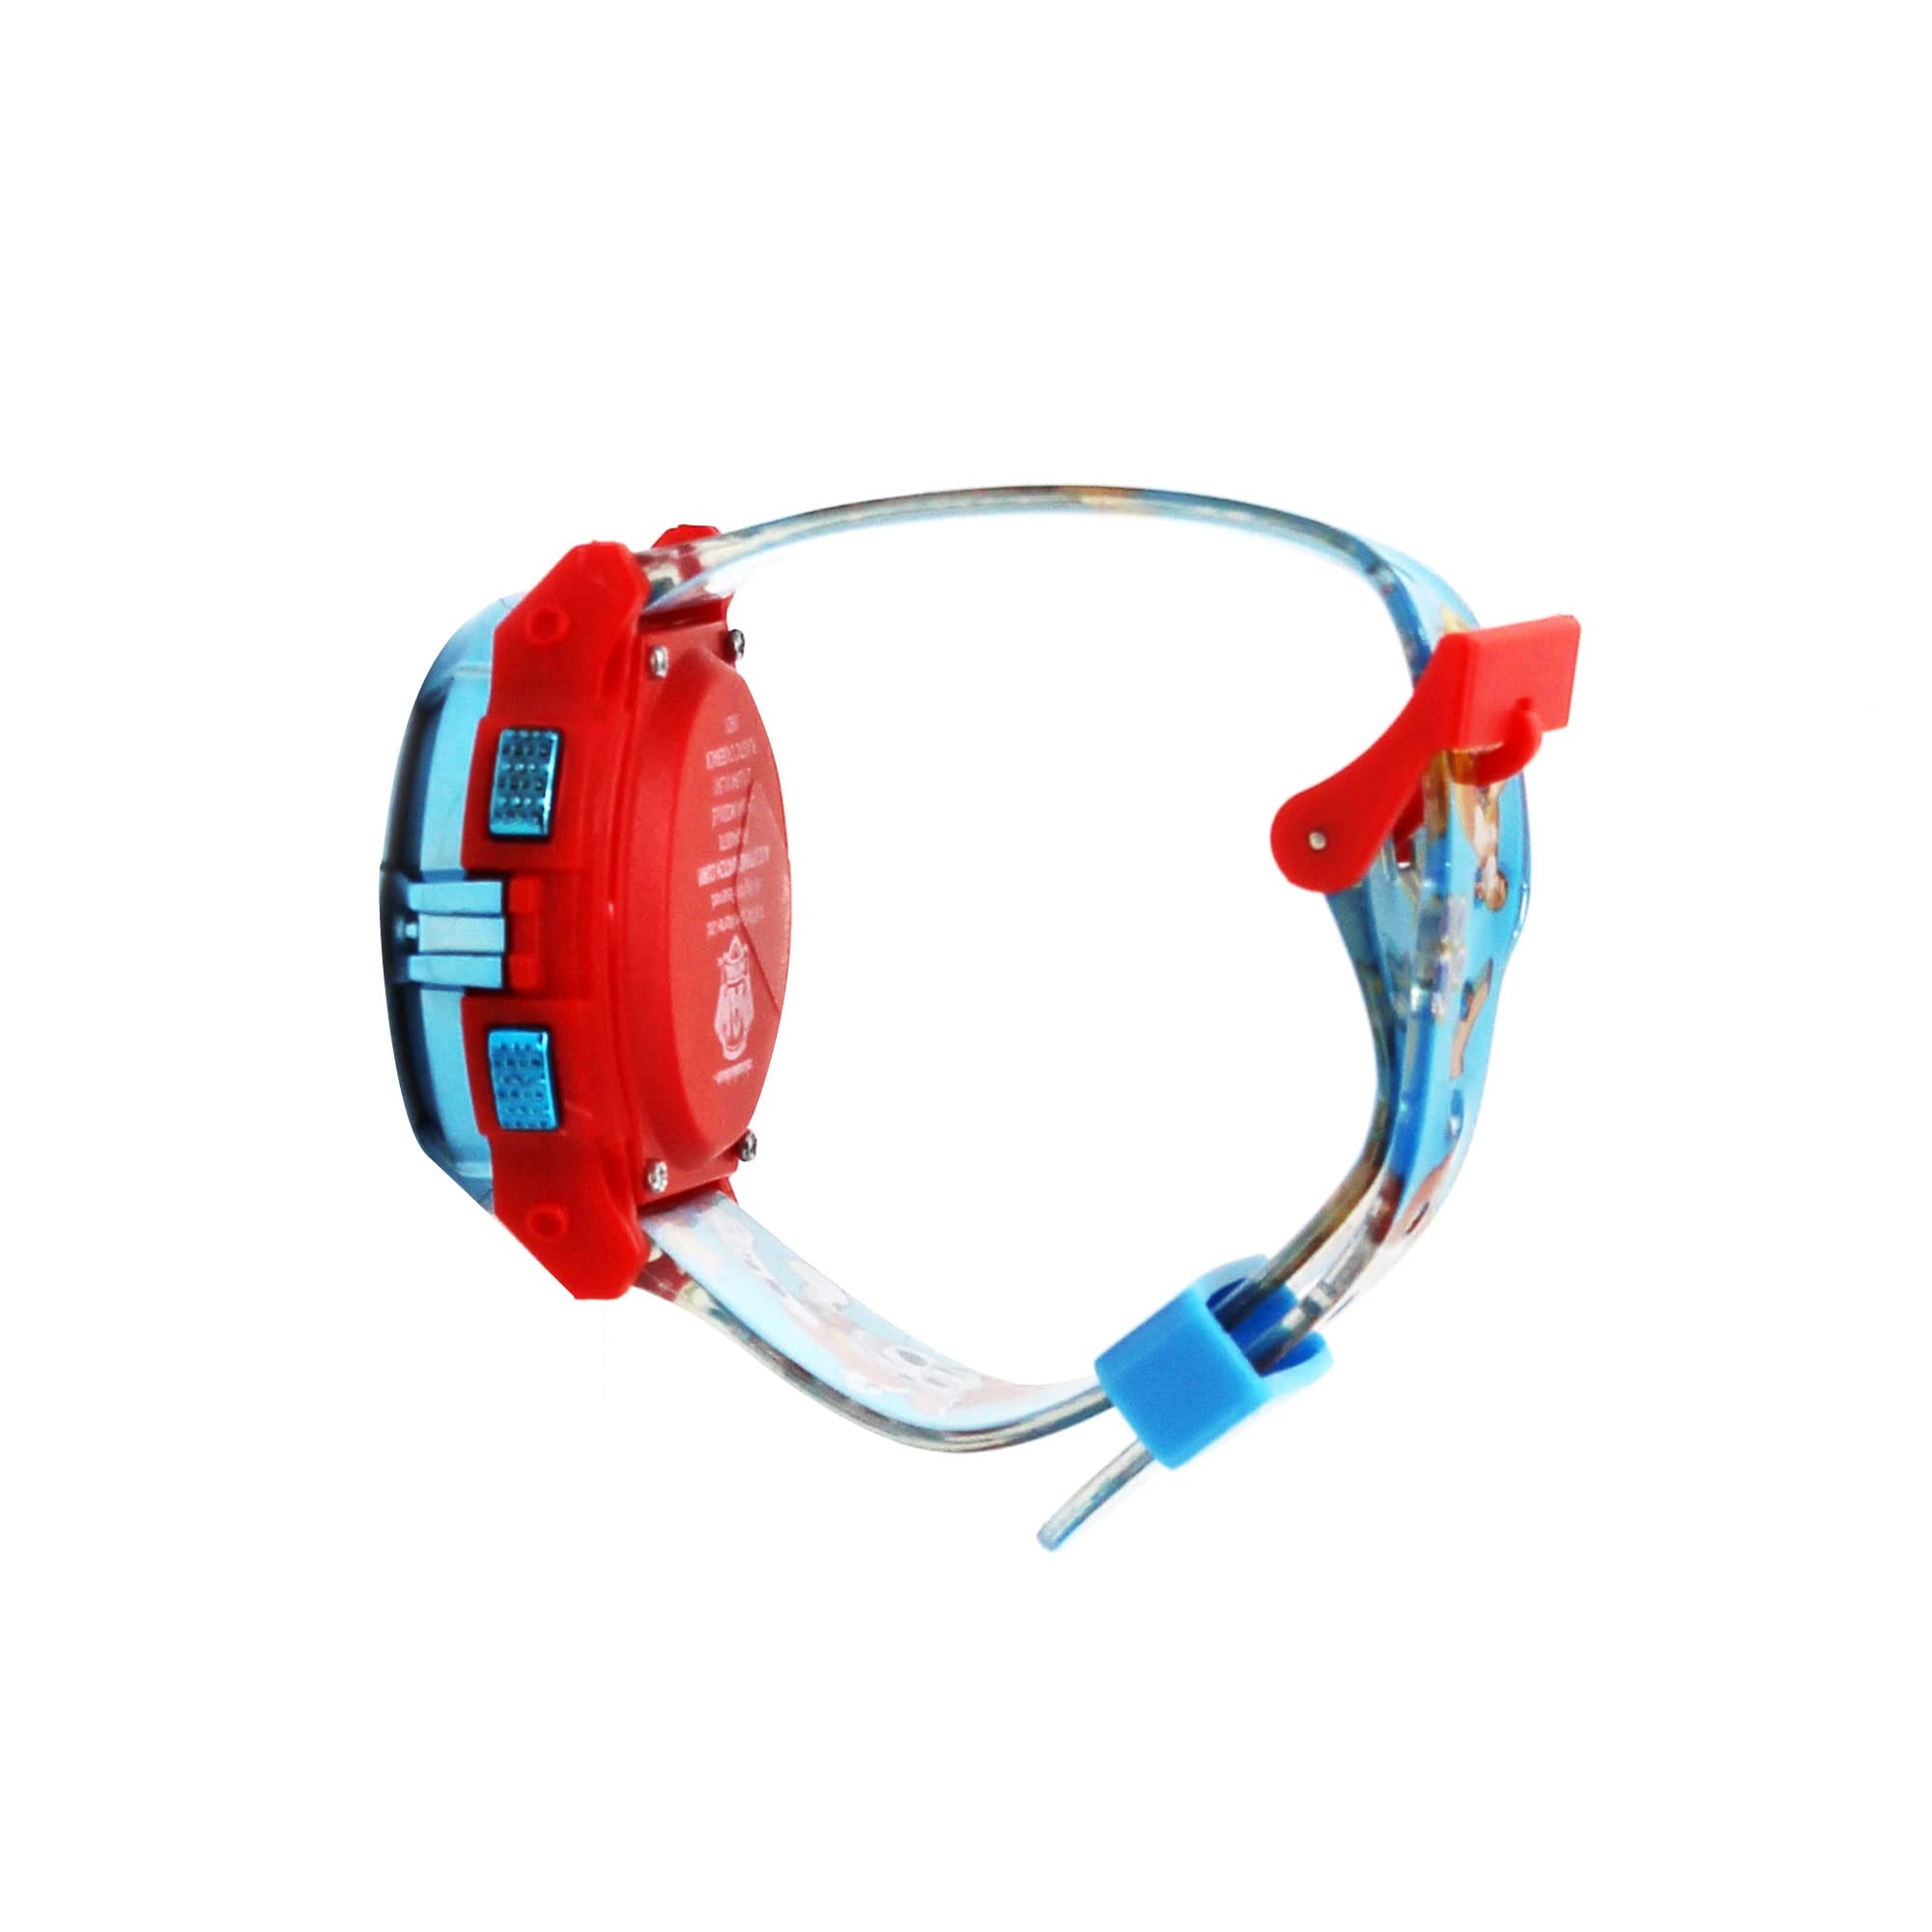 Accutime Kids Nickelodeon Paw Patrol Red & Blue Digital Flashing LCD Quartz Wrist Watch with Flashlight Accessory, Graphic Character Strap for Boys, Girls, Kids (Model: PAW40070AZ)